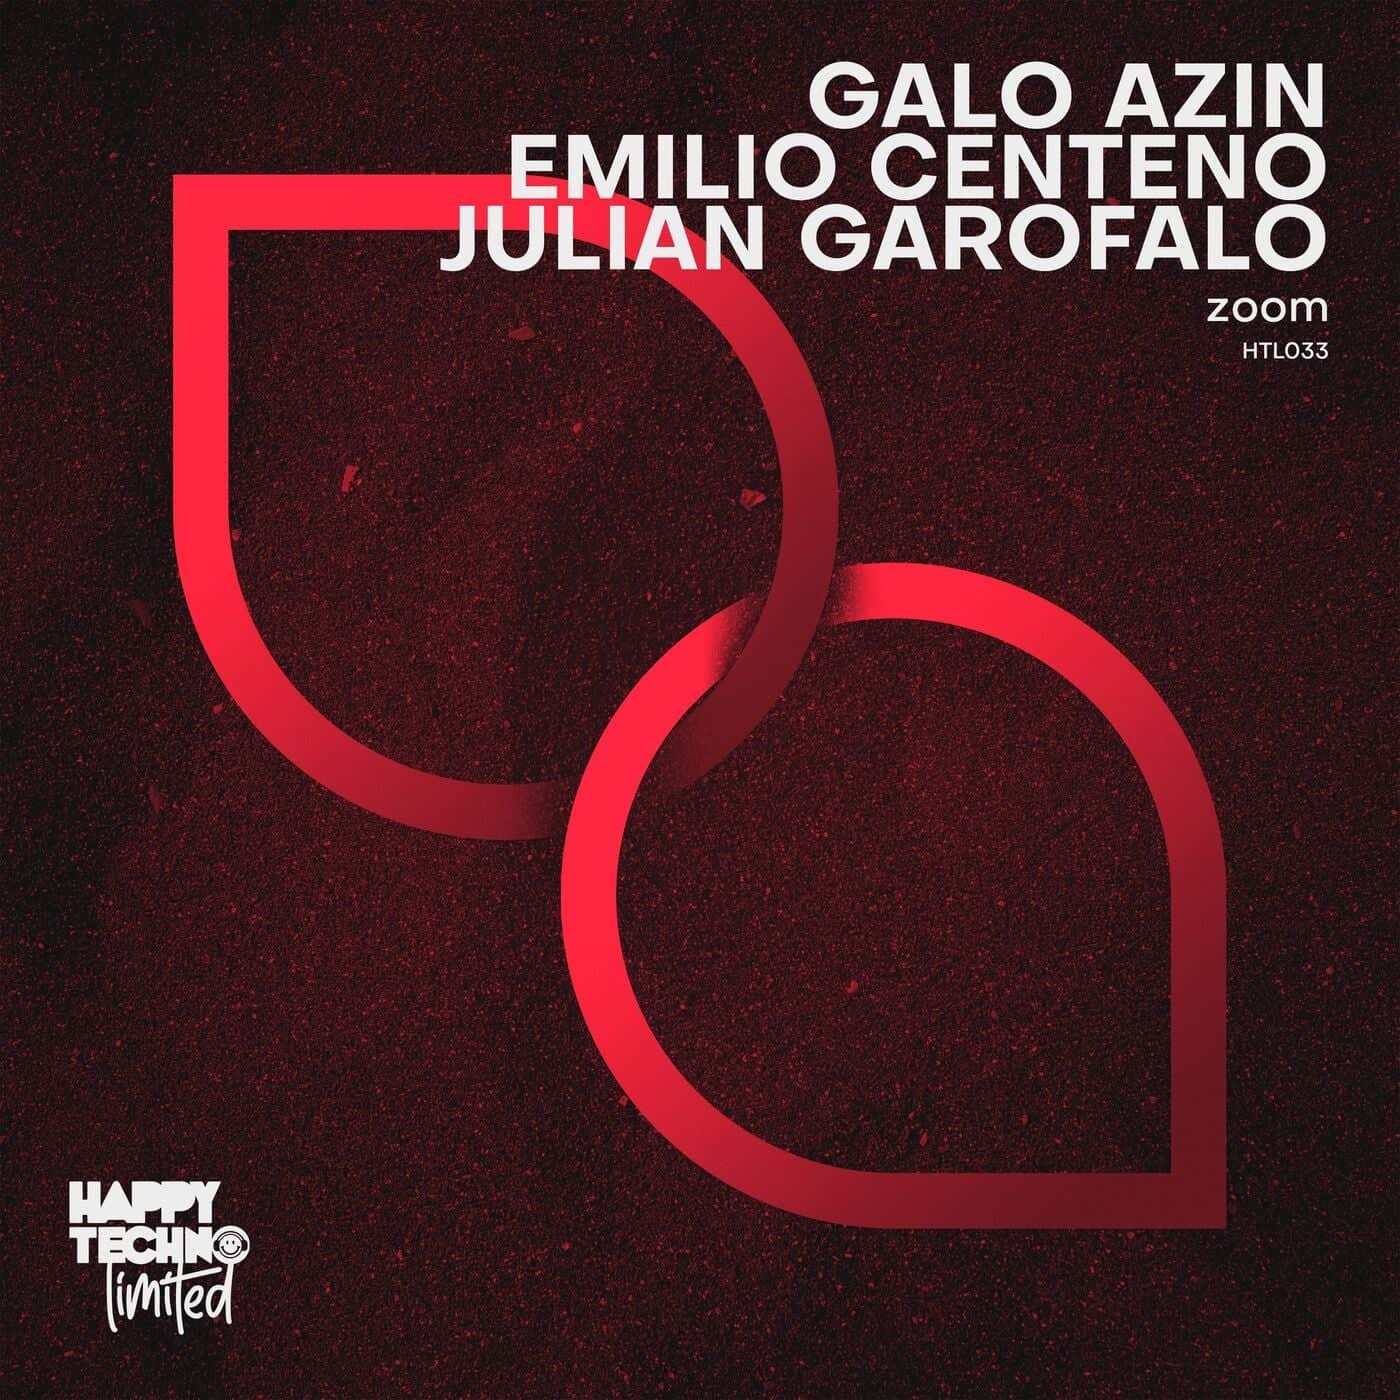 image cover: Emilio Centeno, Galo Azin, Julian Garofalo - Zoom / HTL033